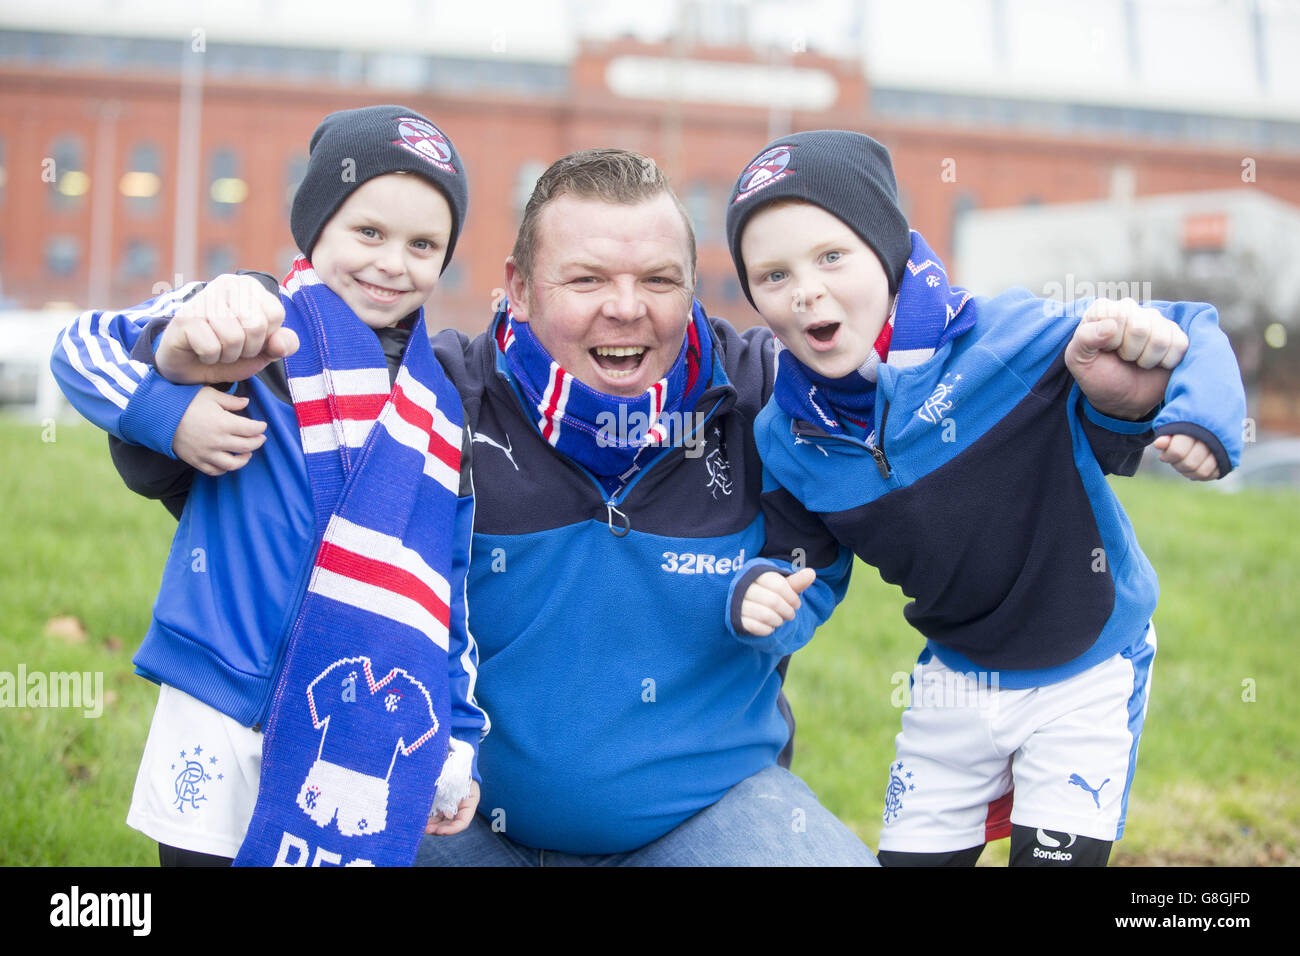 Rangers fans ahead of the Ladbrokes Scottish Championship match at Ibrox Stadium, Glasgow. Stock Photo